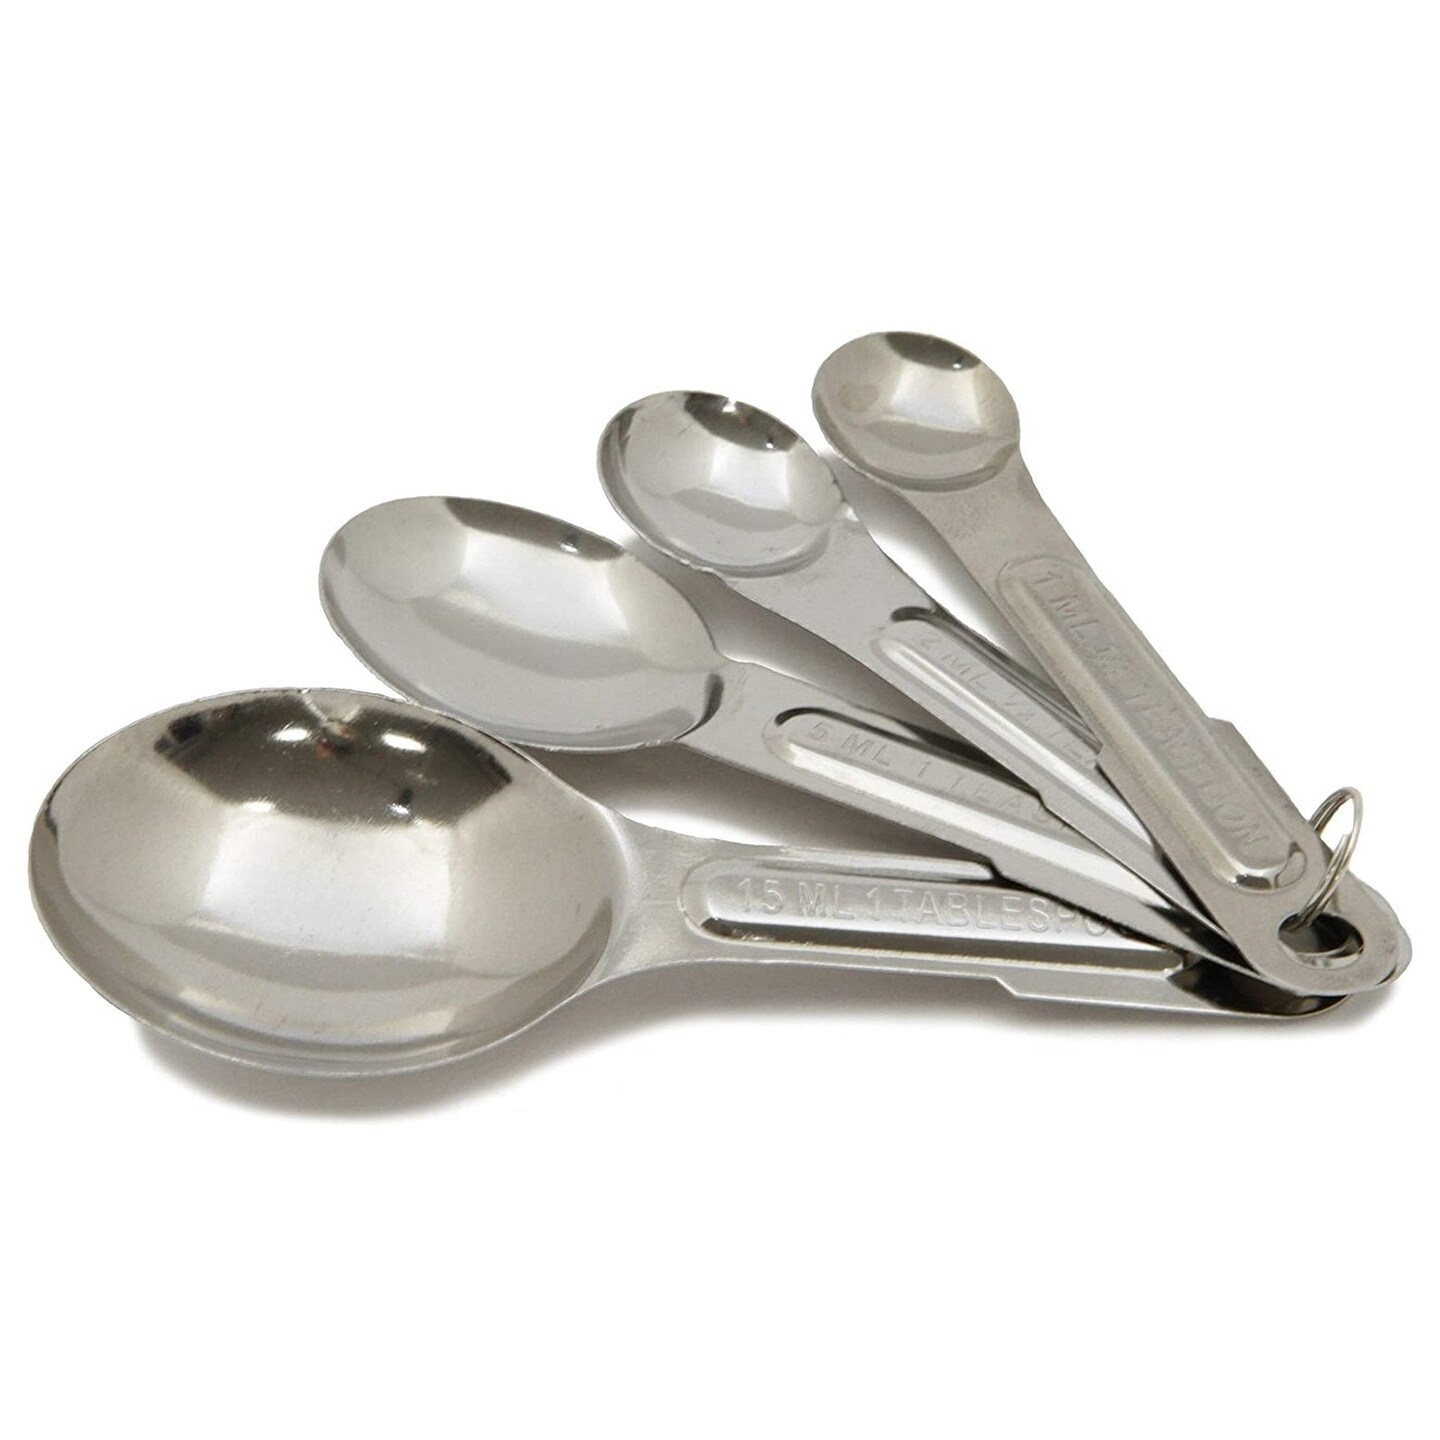 stainless steel teaspoon measuring spoons for